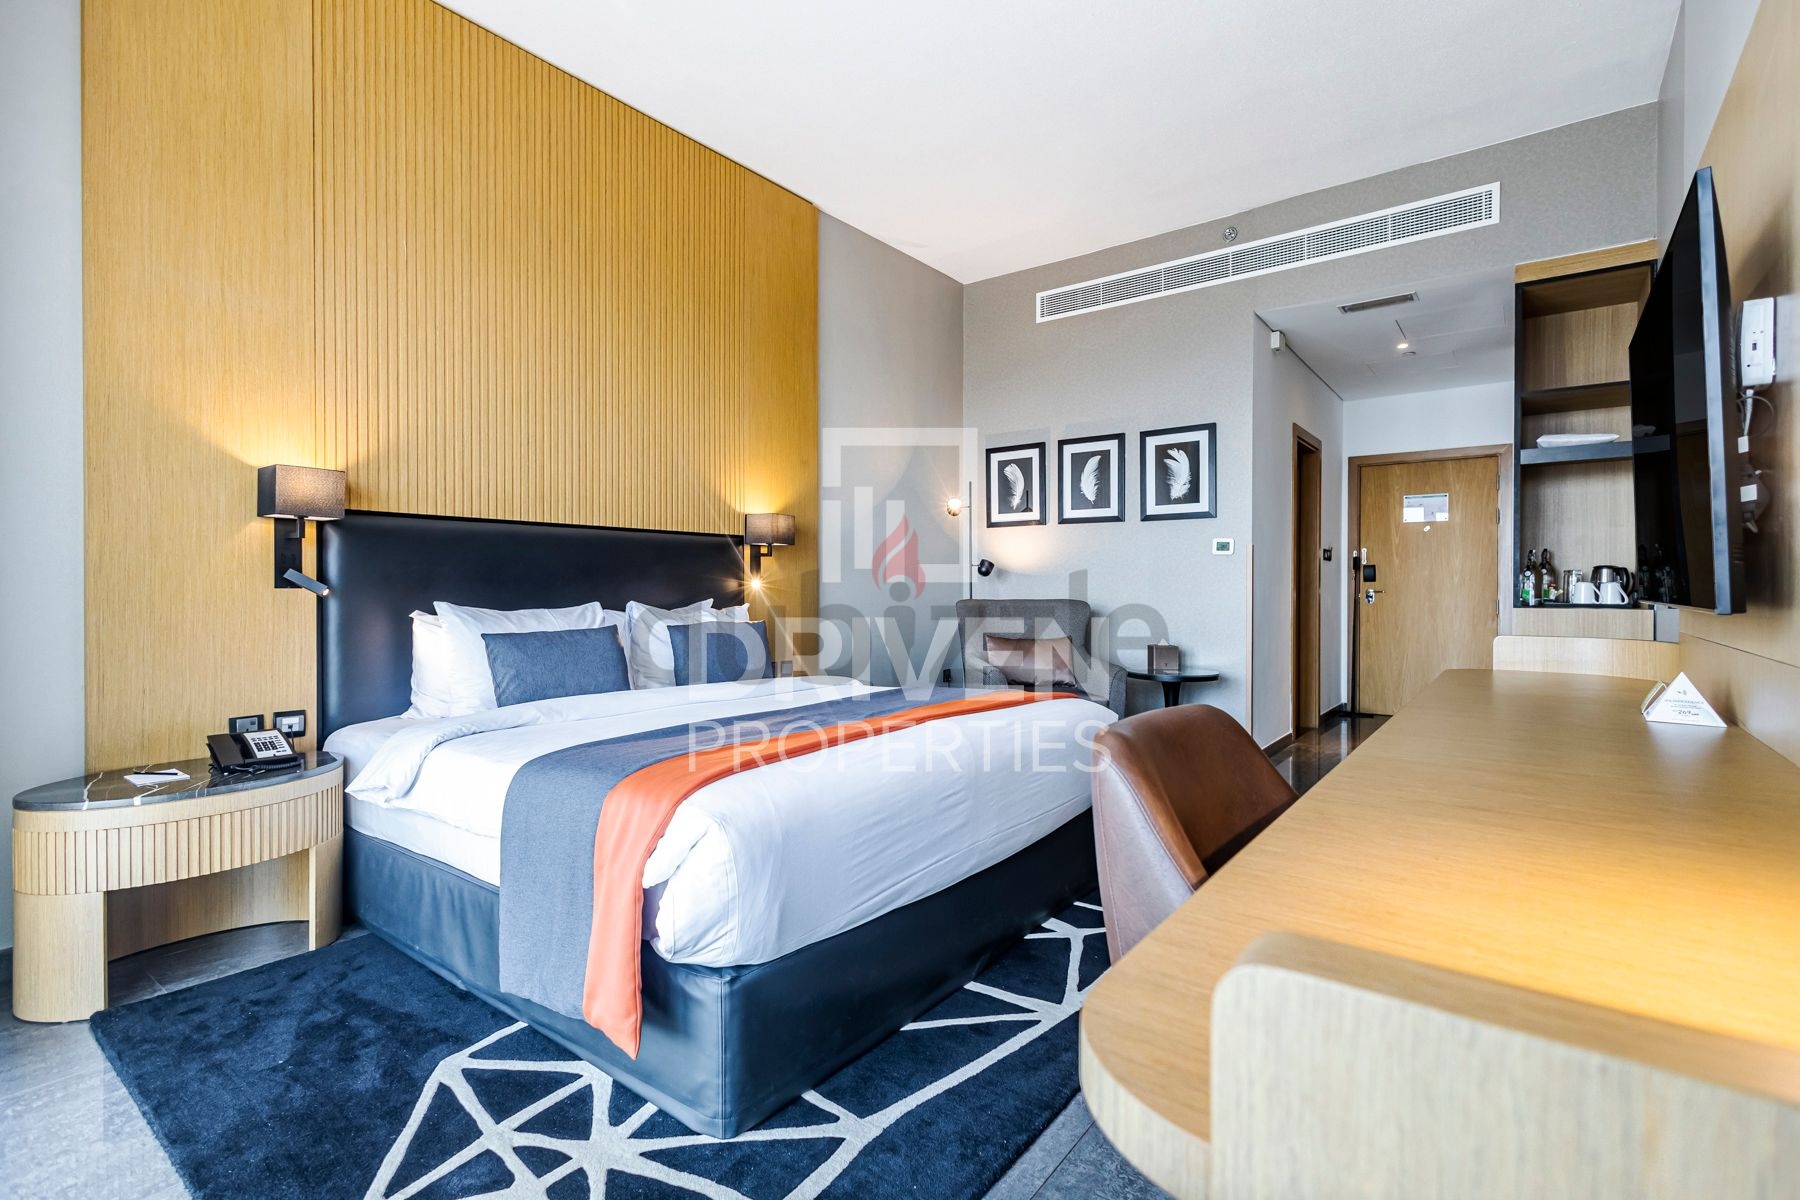 Luxurious | Furnished | 4 Star Hotel Apt